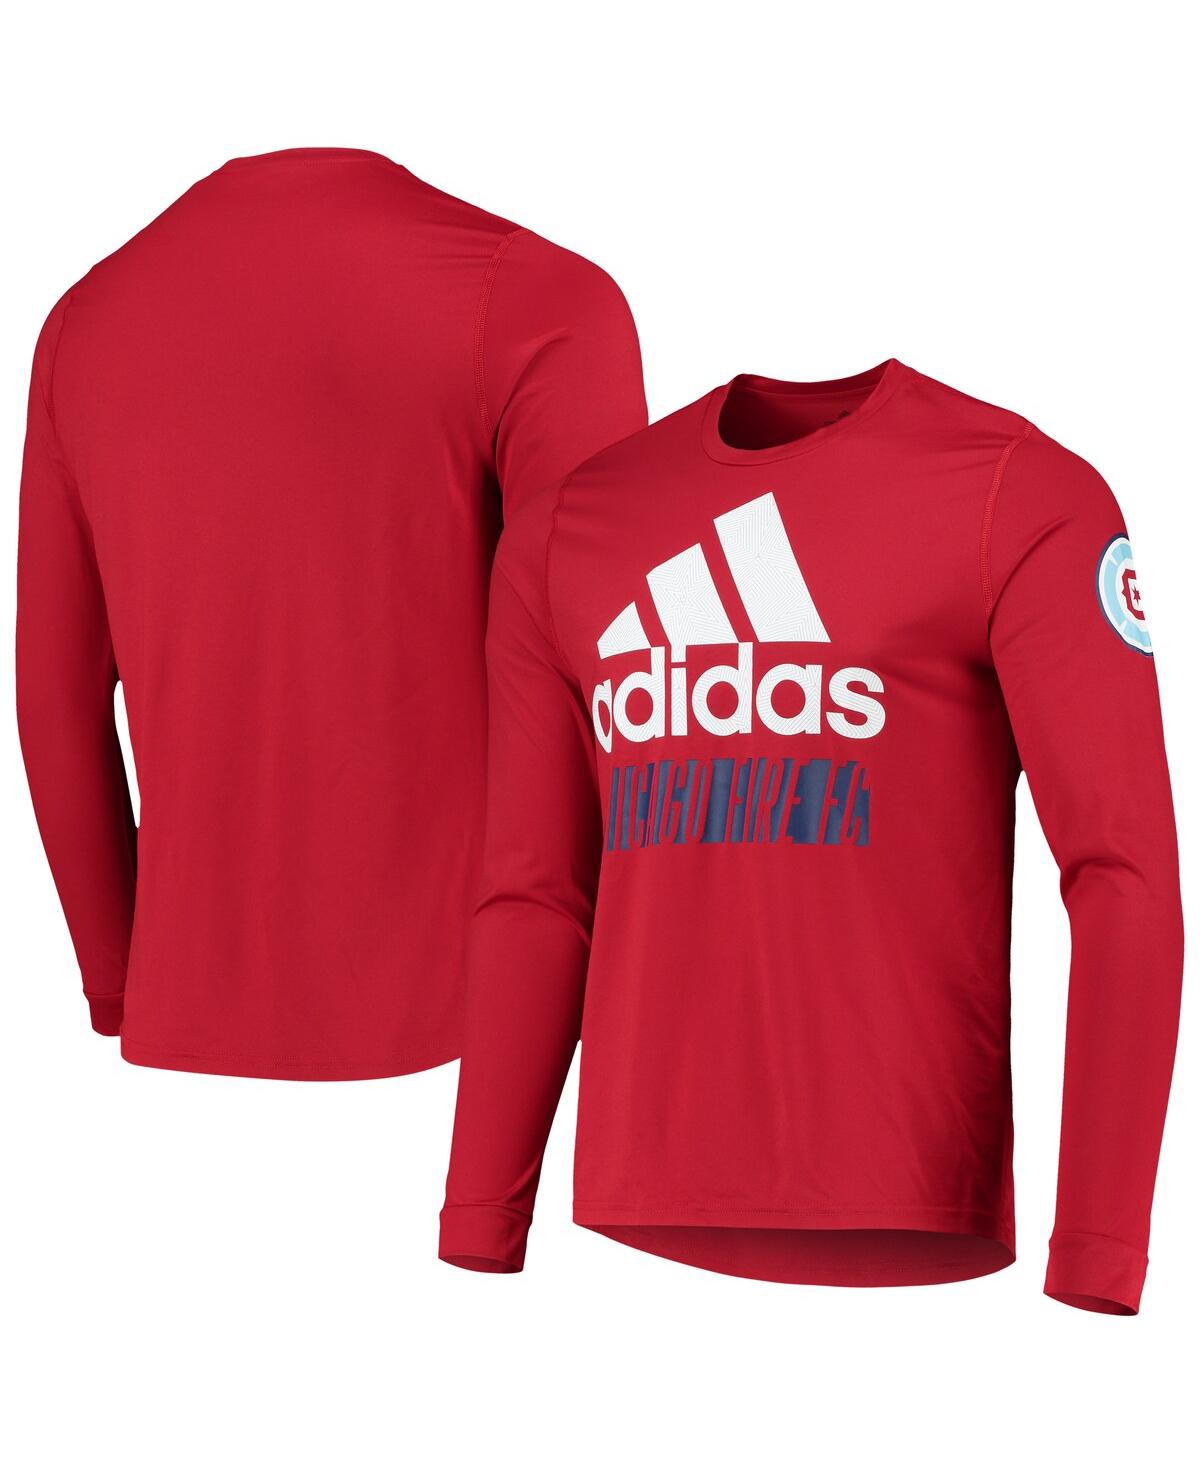 Shop Adidas Originals Men's Adidas Red Chicago Fire Vintage-like Performance Long Sleeve T-shirt